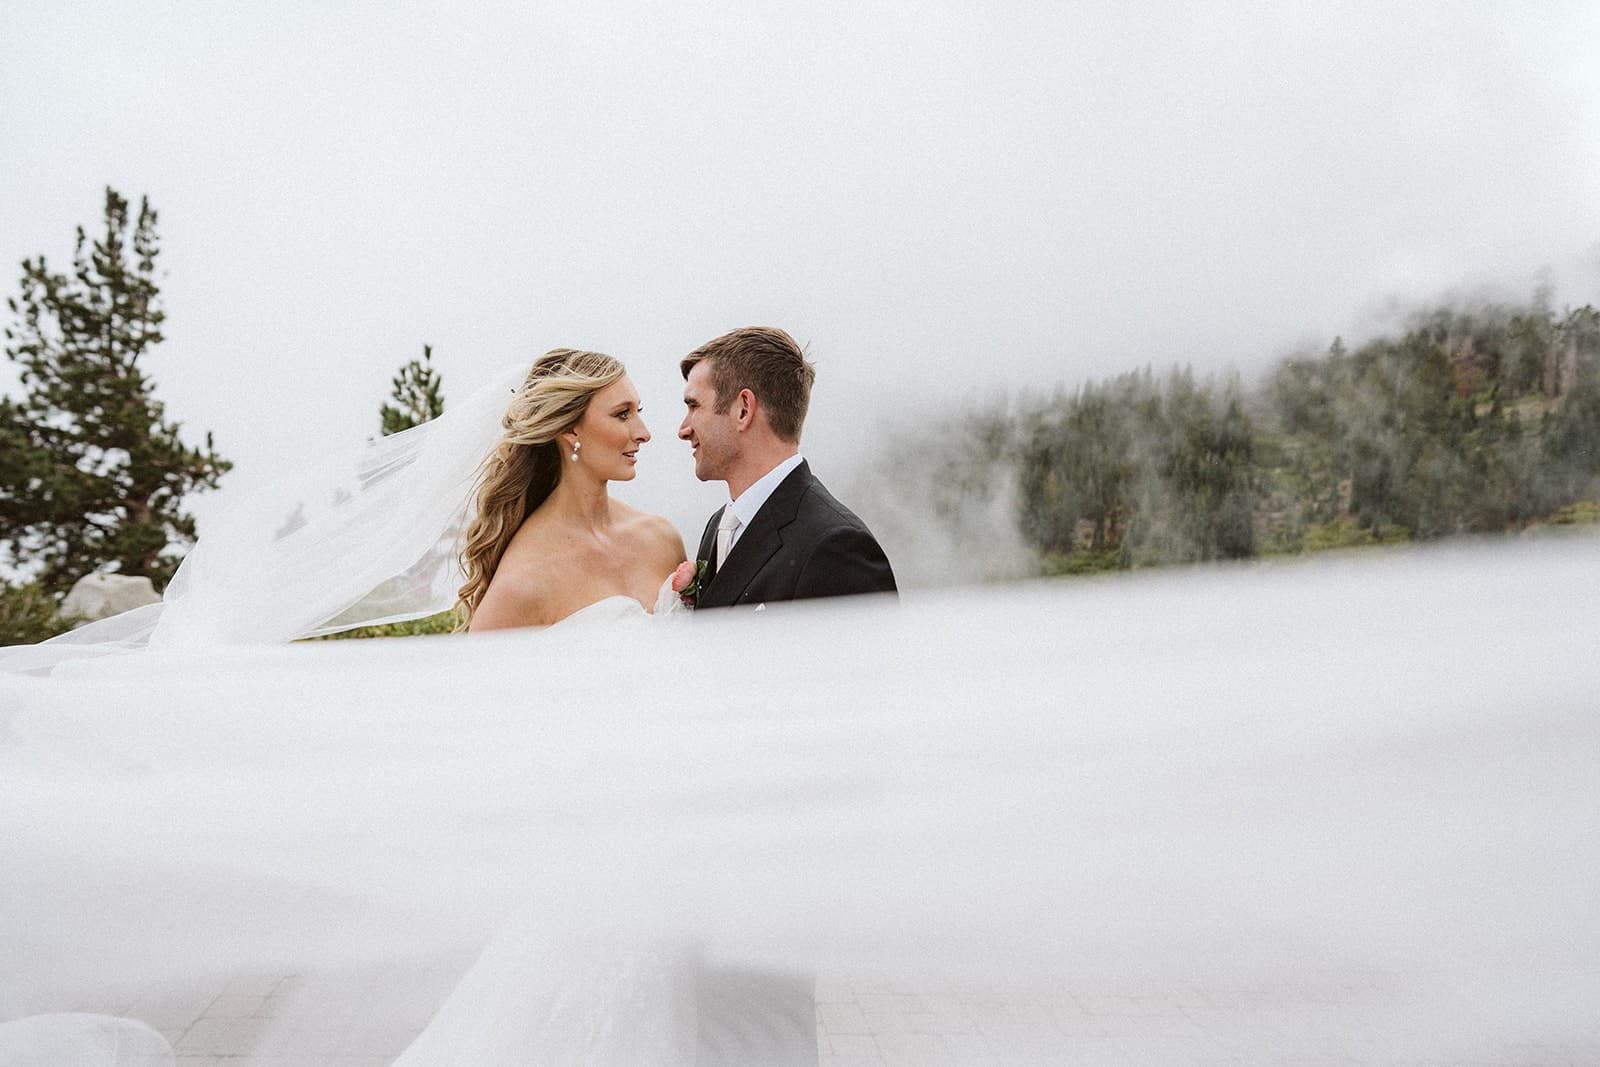 Rachel & Brendan | Wedding at Winters Creek Lodge, Reno NV